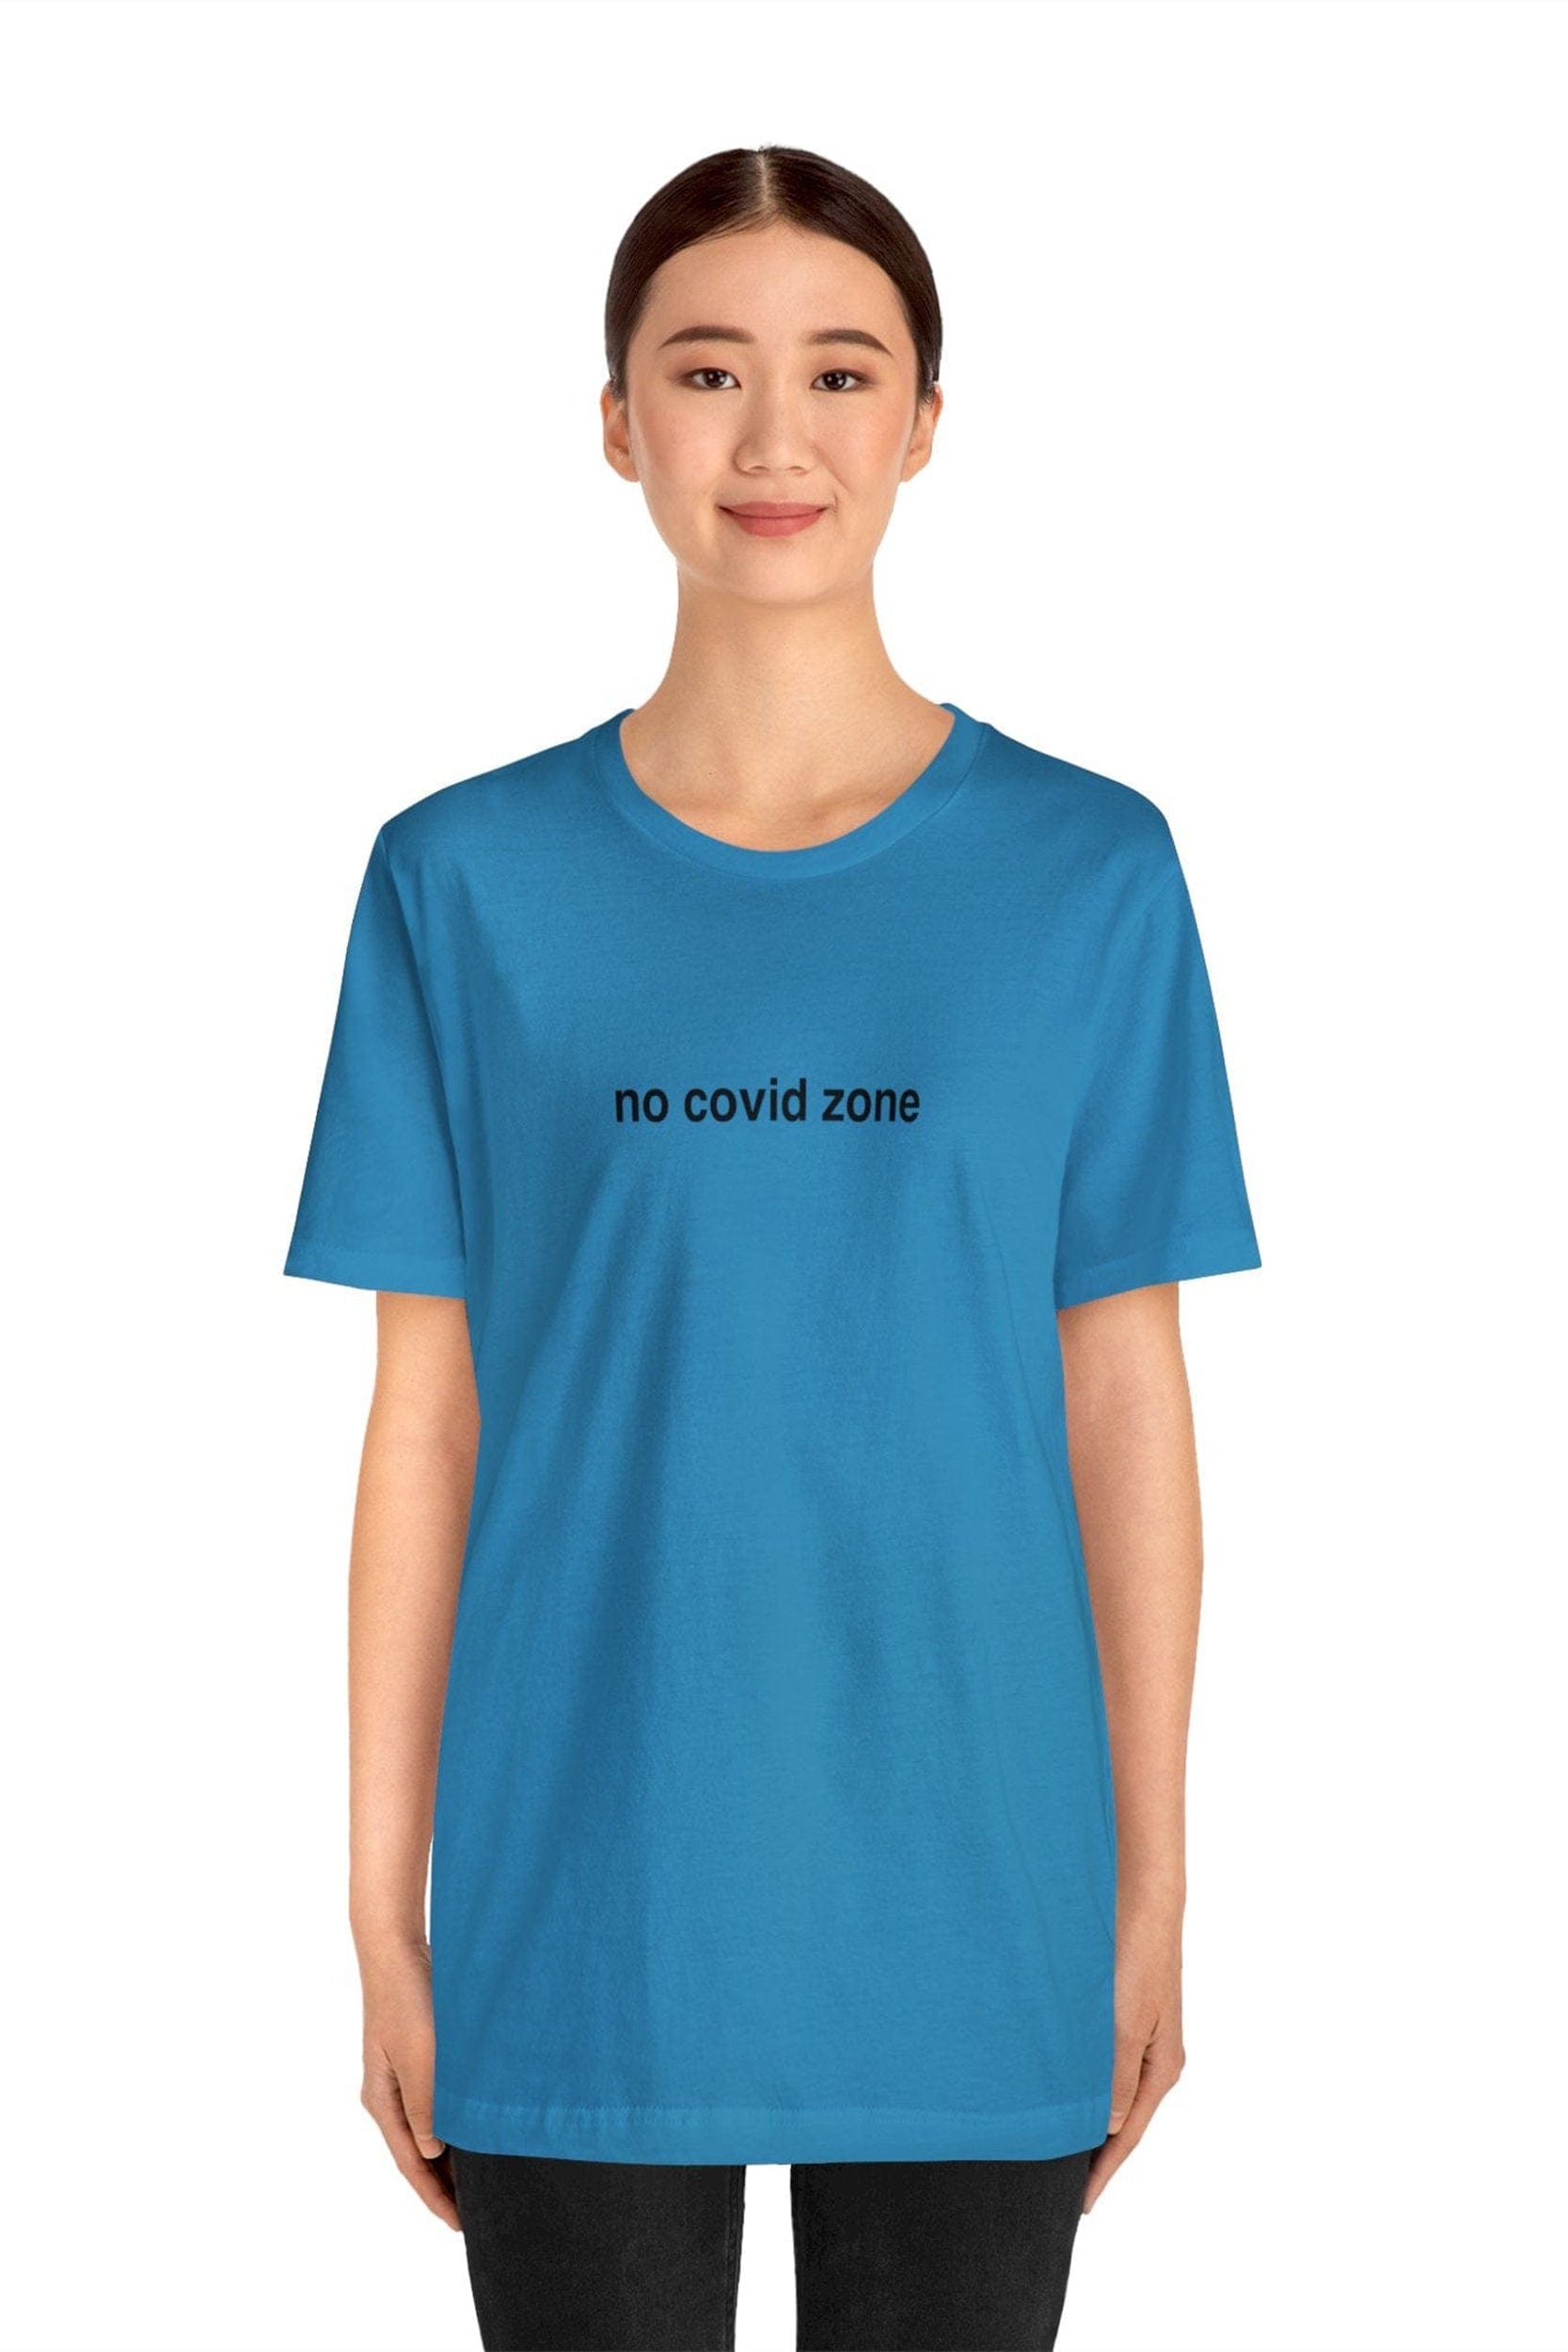 "no covid zone" T-Shirt